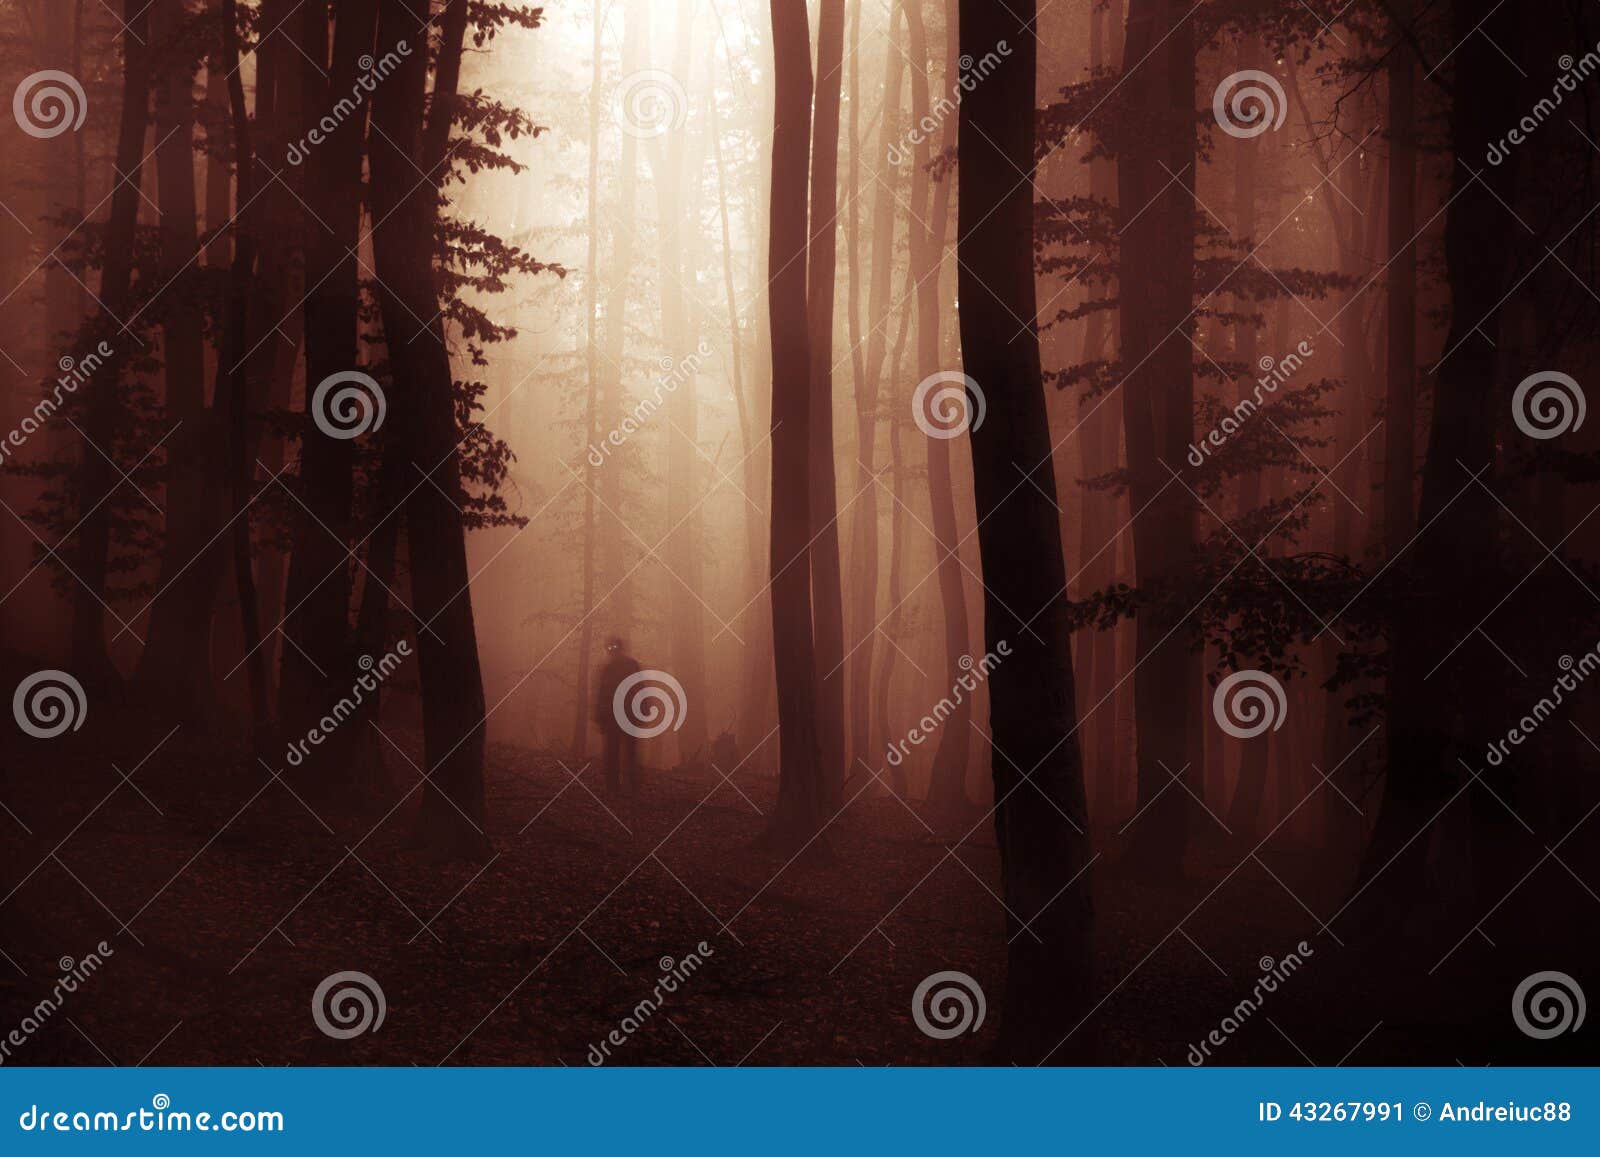 dark halloween apparition ghost in forest with fog